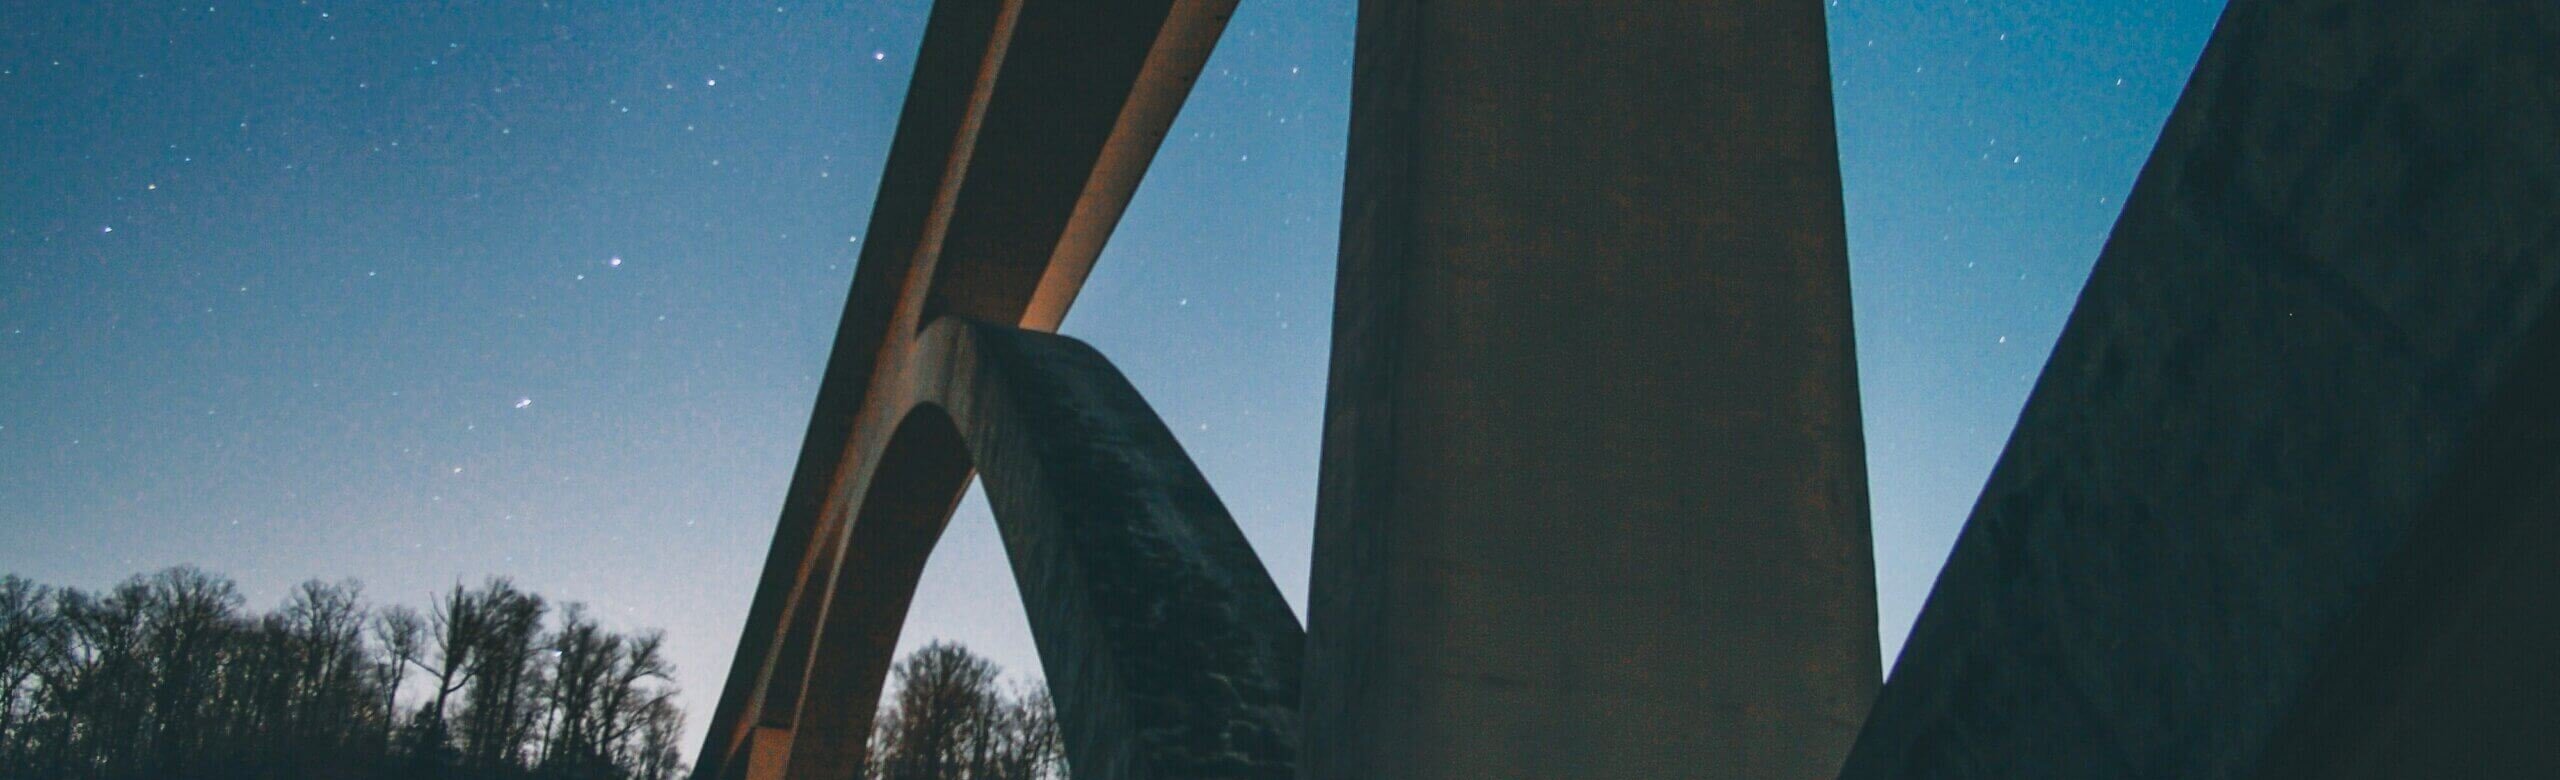 A photo of a bridge under a starry night sky.